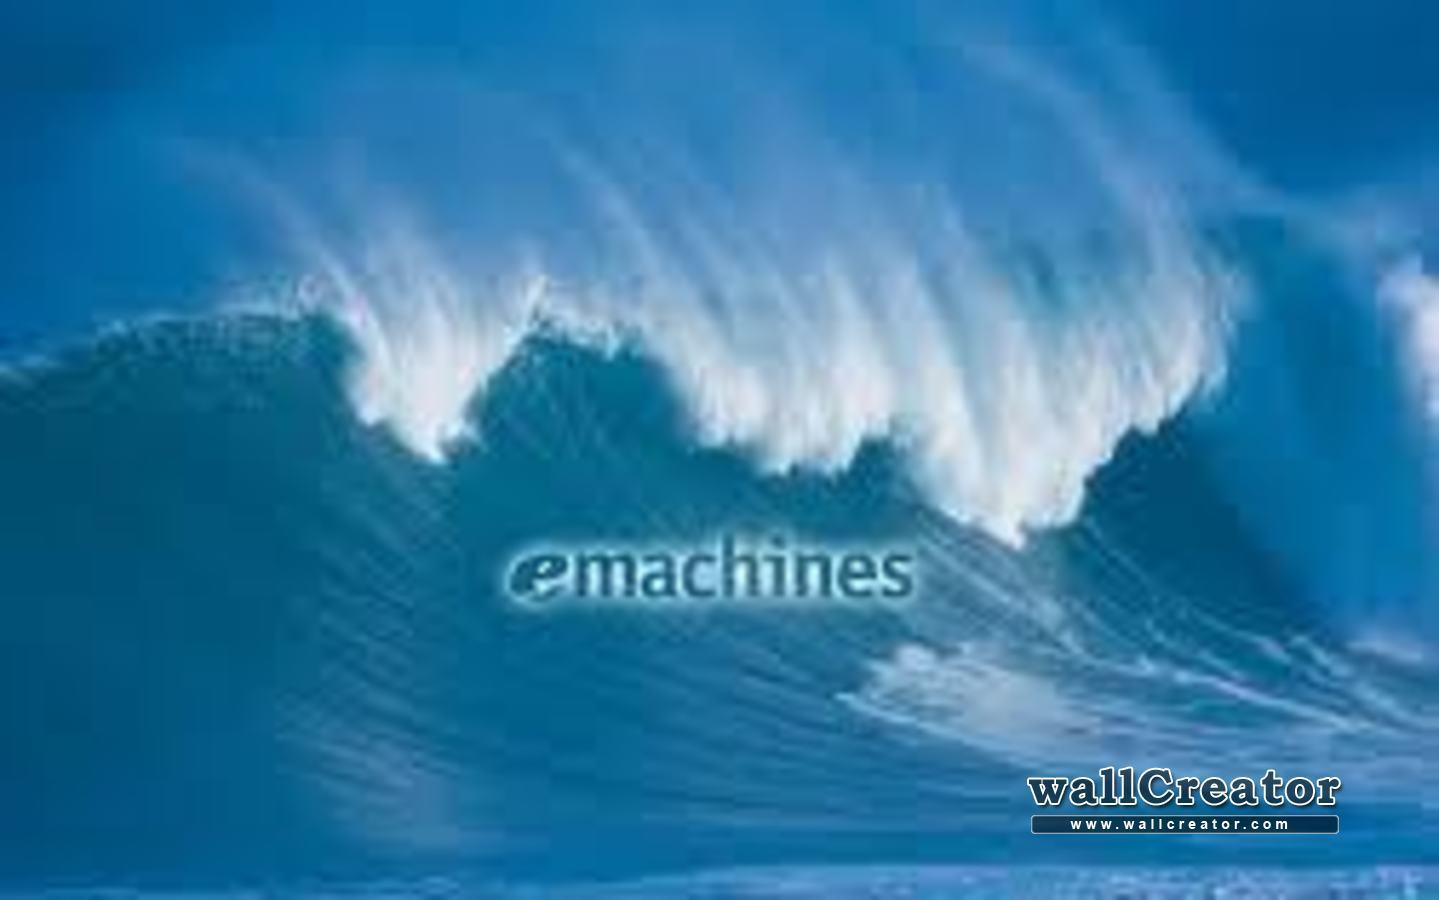 Emachines™ Wallpaper / 900 Wallpaper